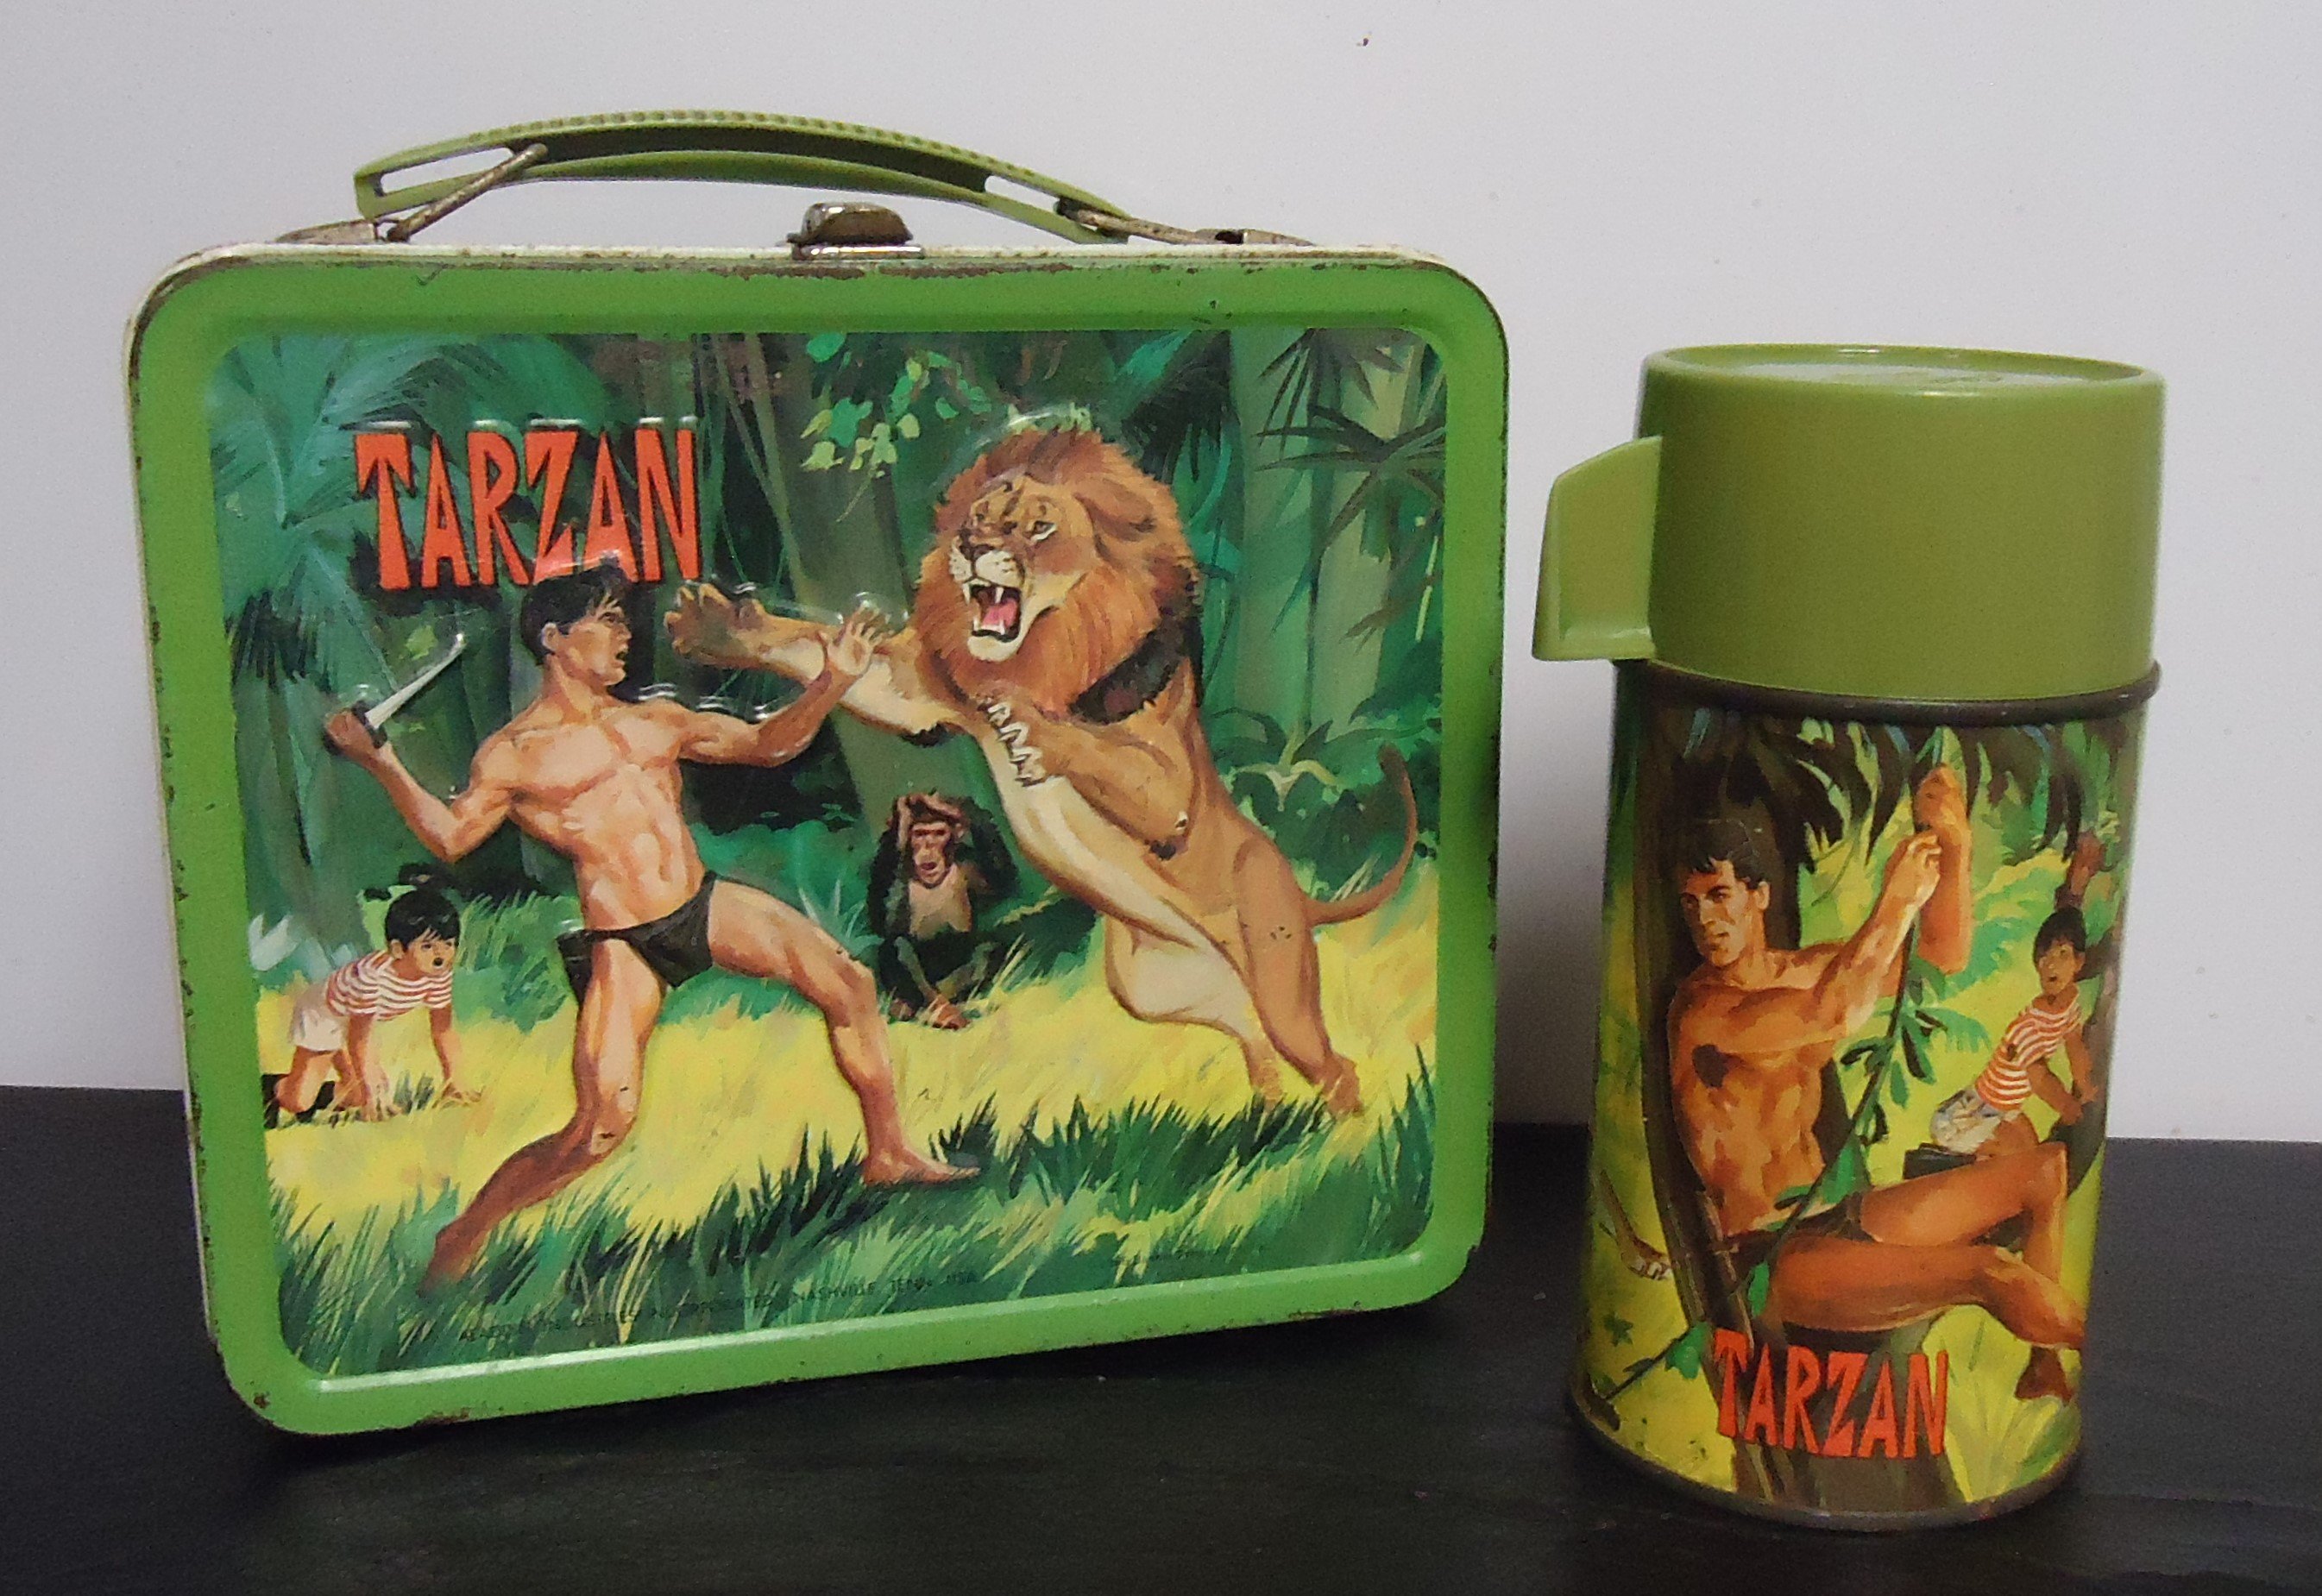 (2A) "Tarzan" Metal Lunch Box
W/ Thermos
$150.00